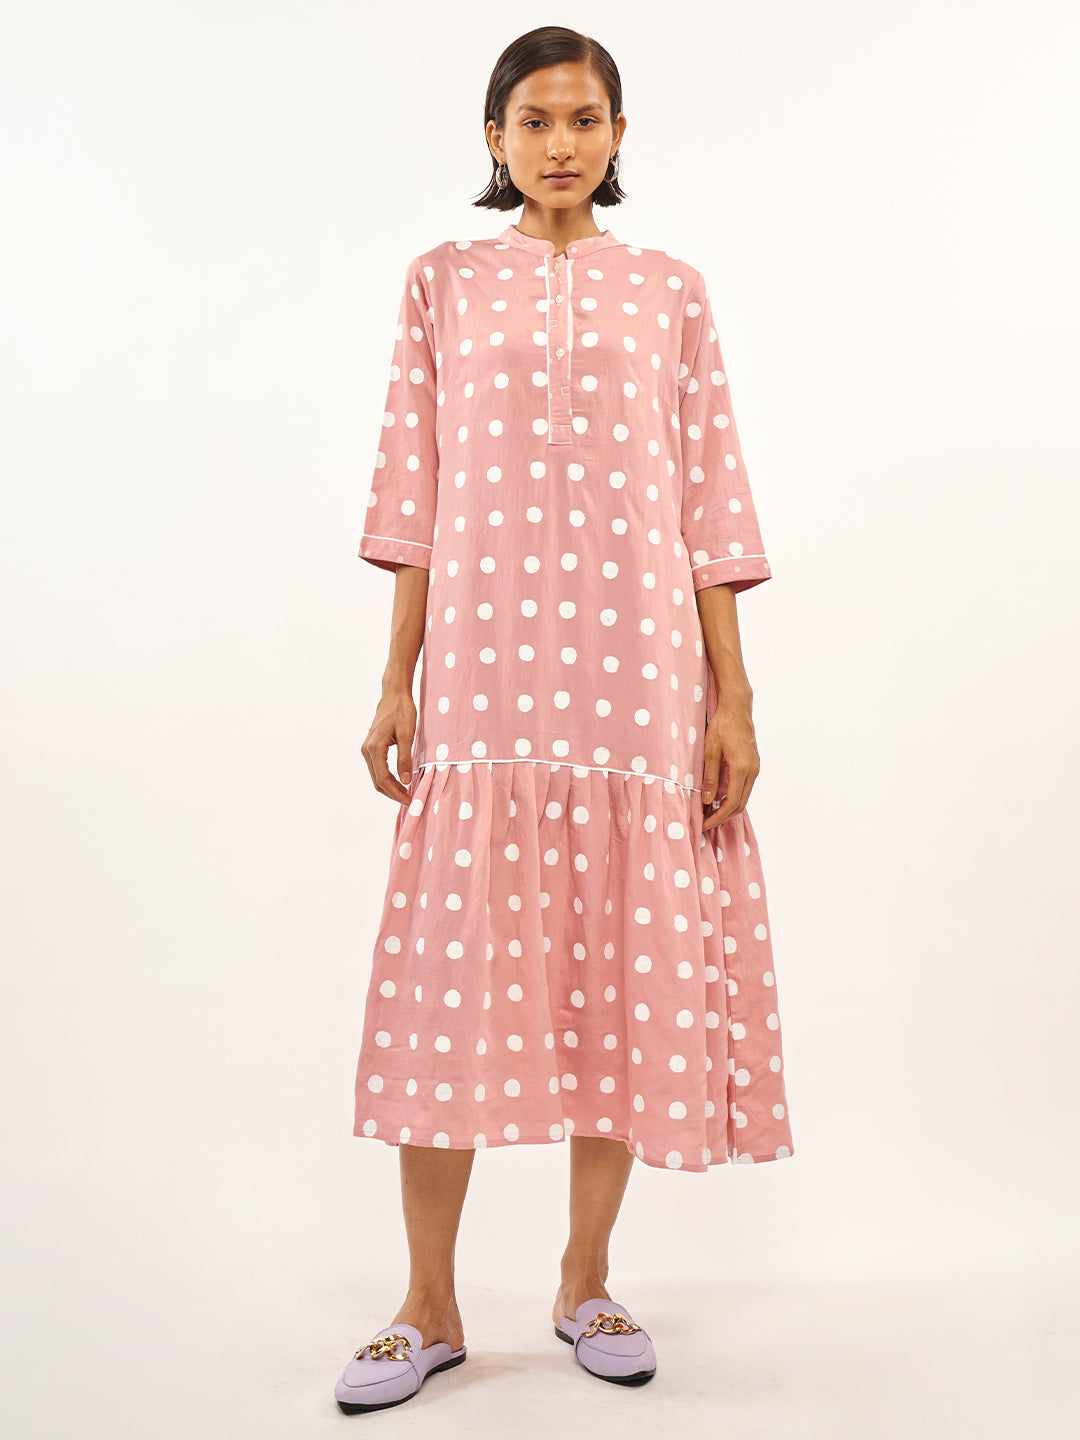 Polka Dot Print Light Pink Dress - ARH259